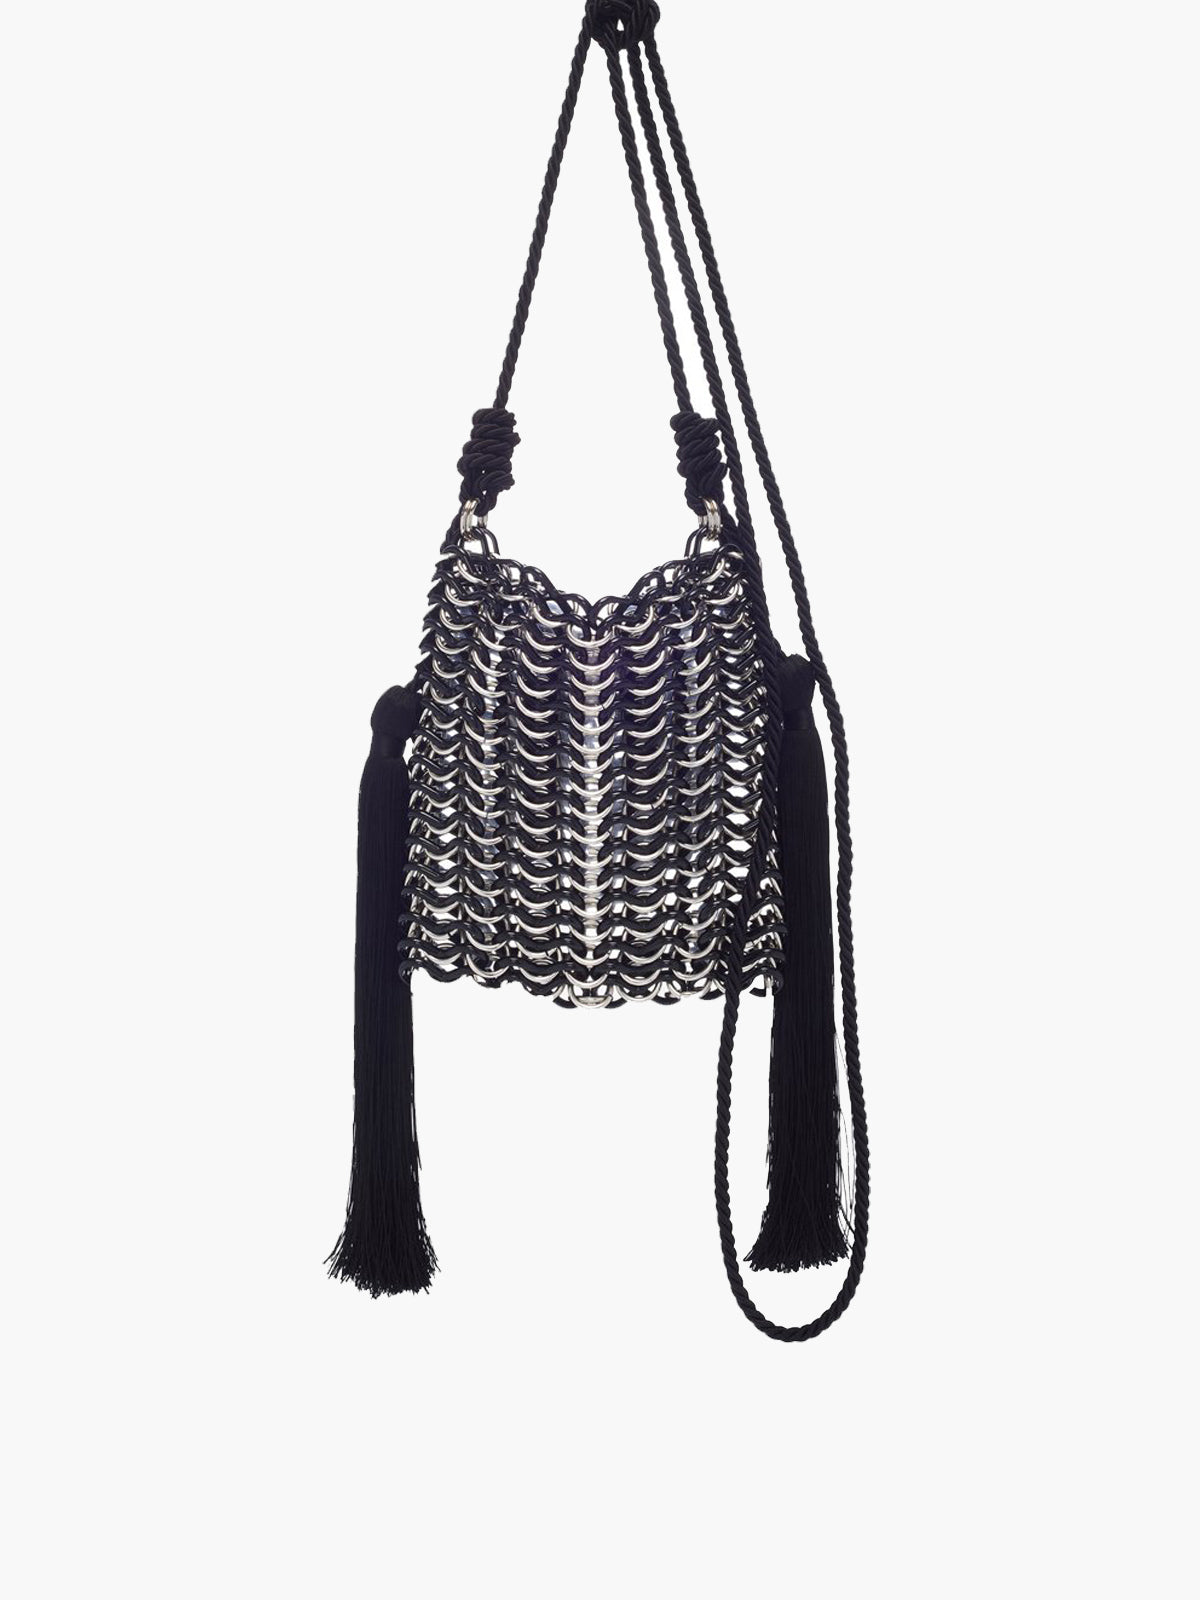 Luisella Shell Bag | Black - Fashionkind